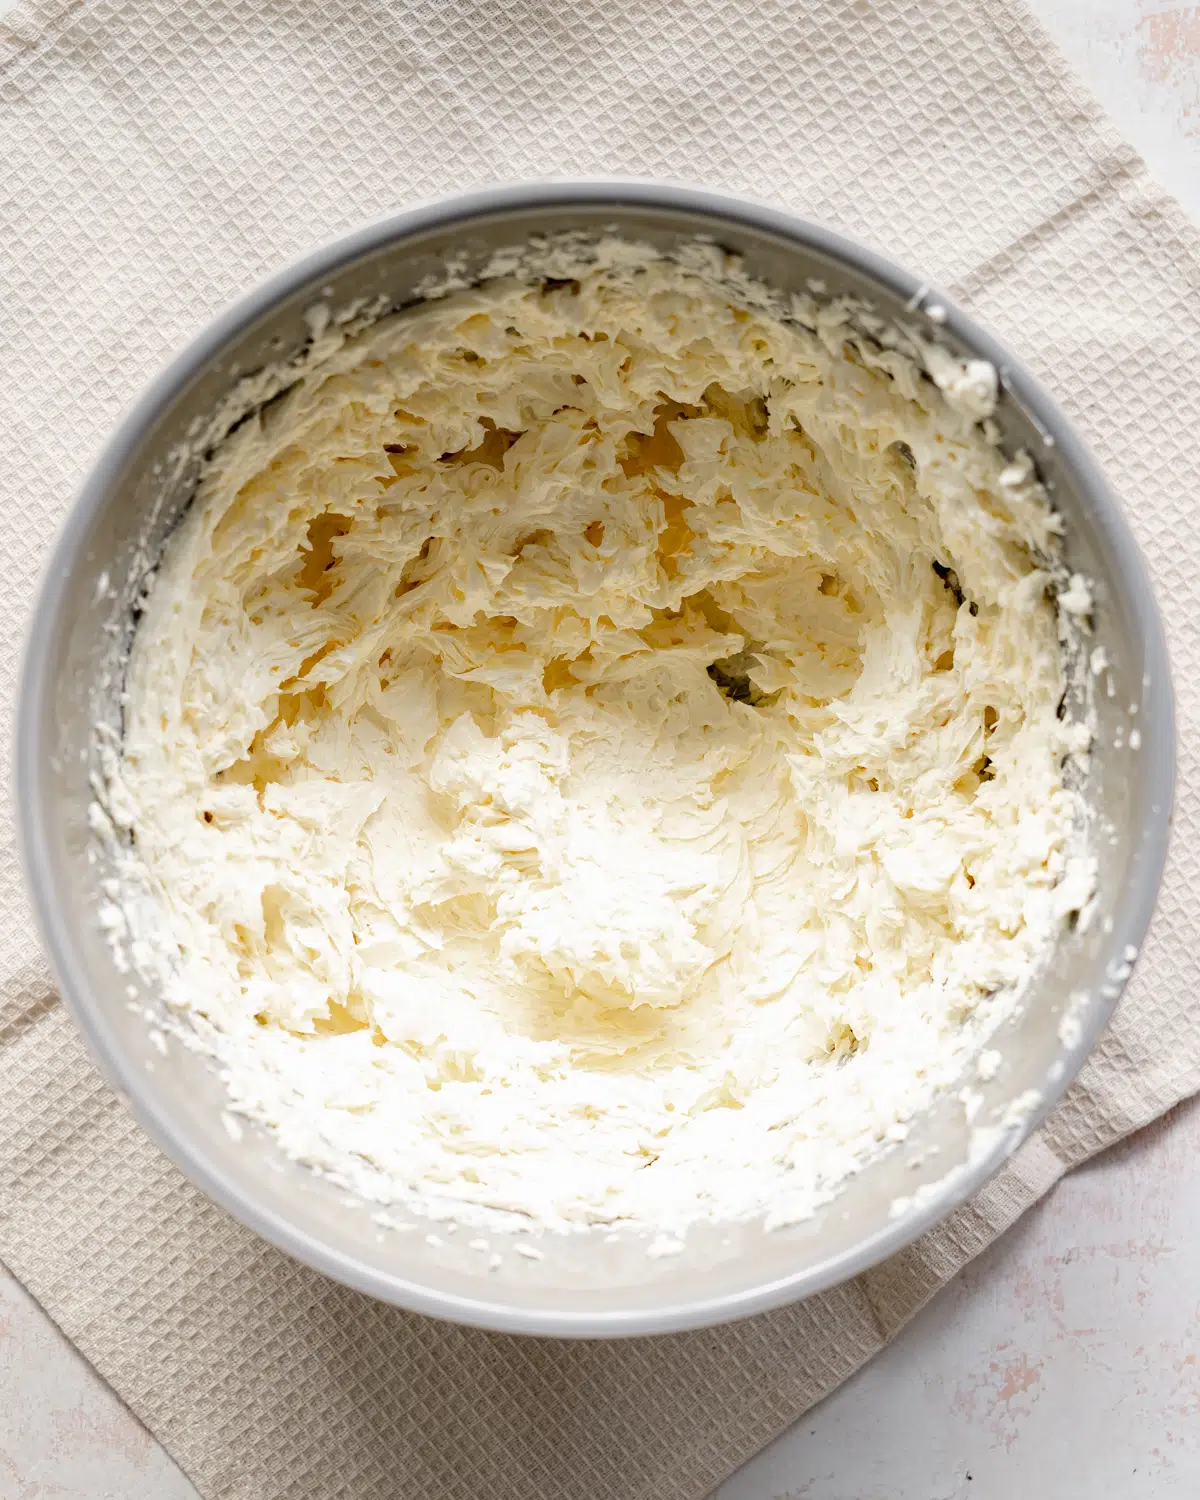 vegan swiss meringue buttercream in a bowl.